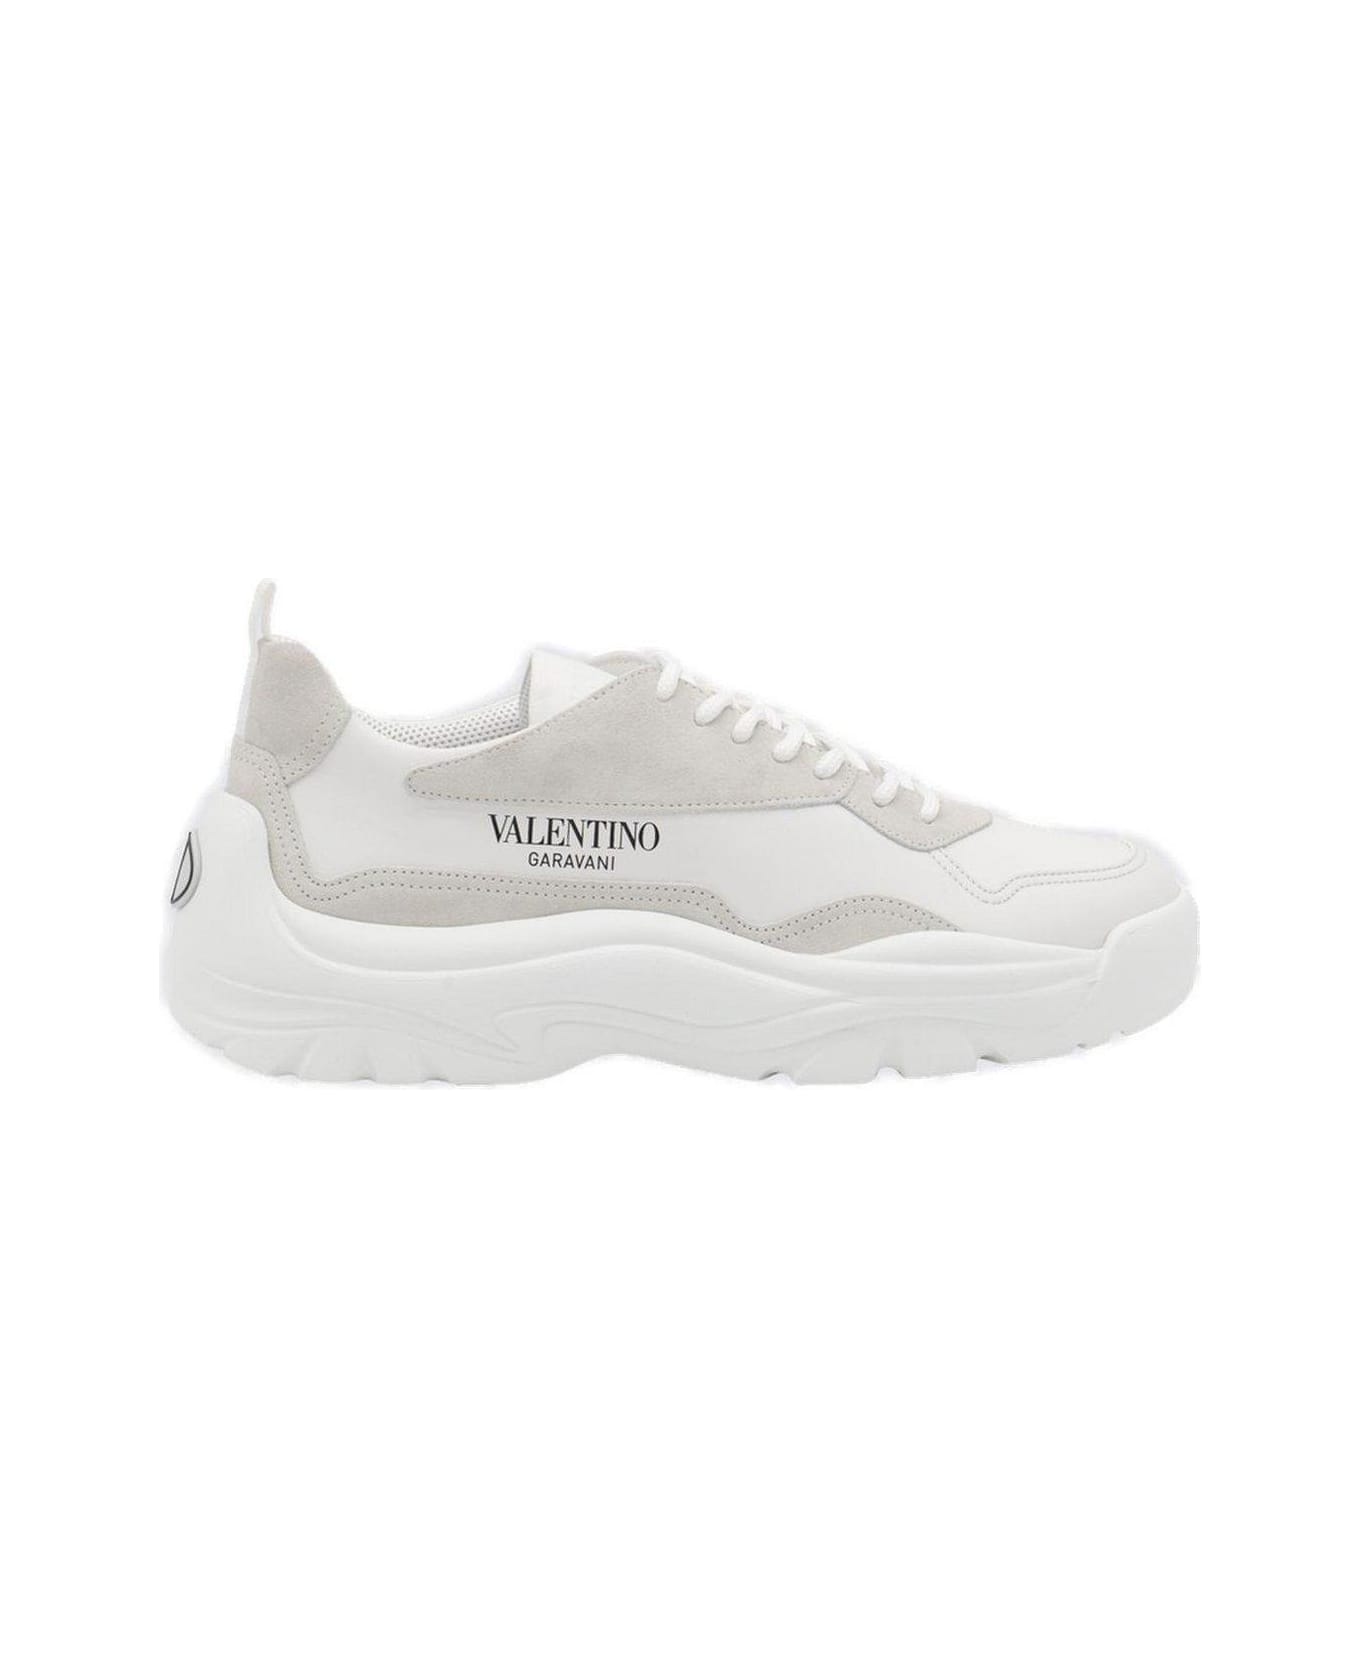 Valentino Garavani Gumboy Lace-up Sneakers - White スニーカー